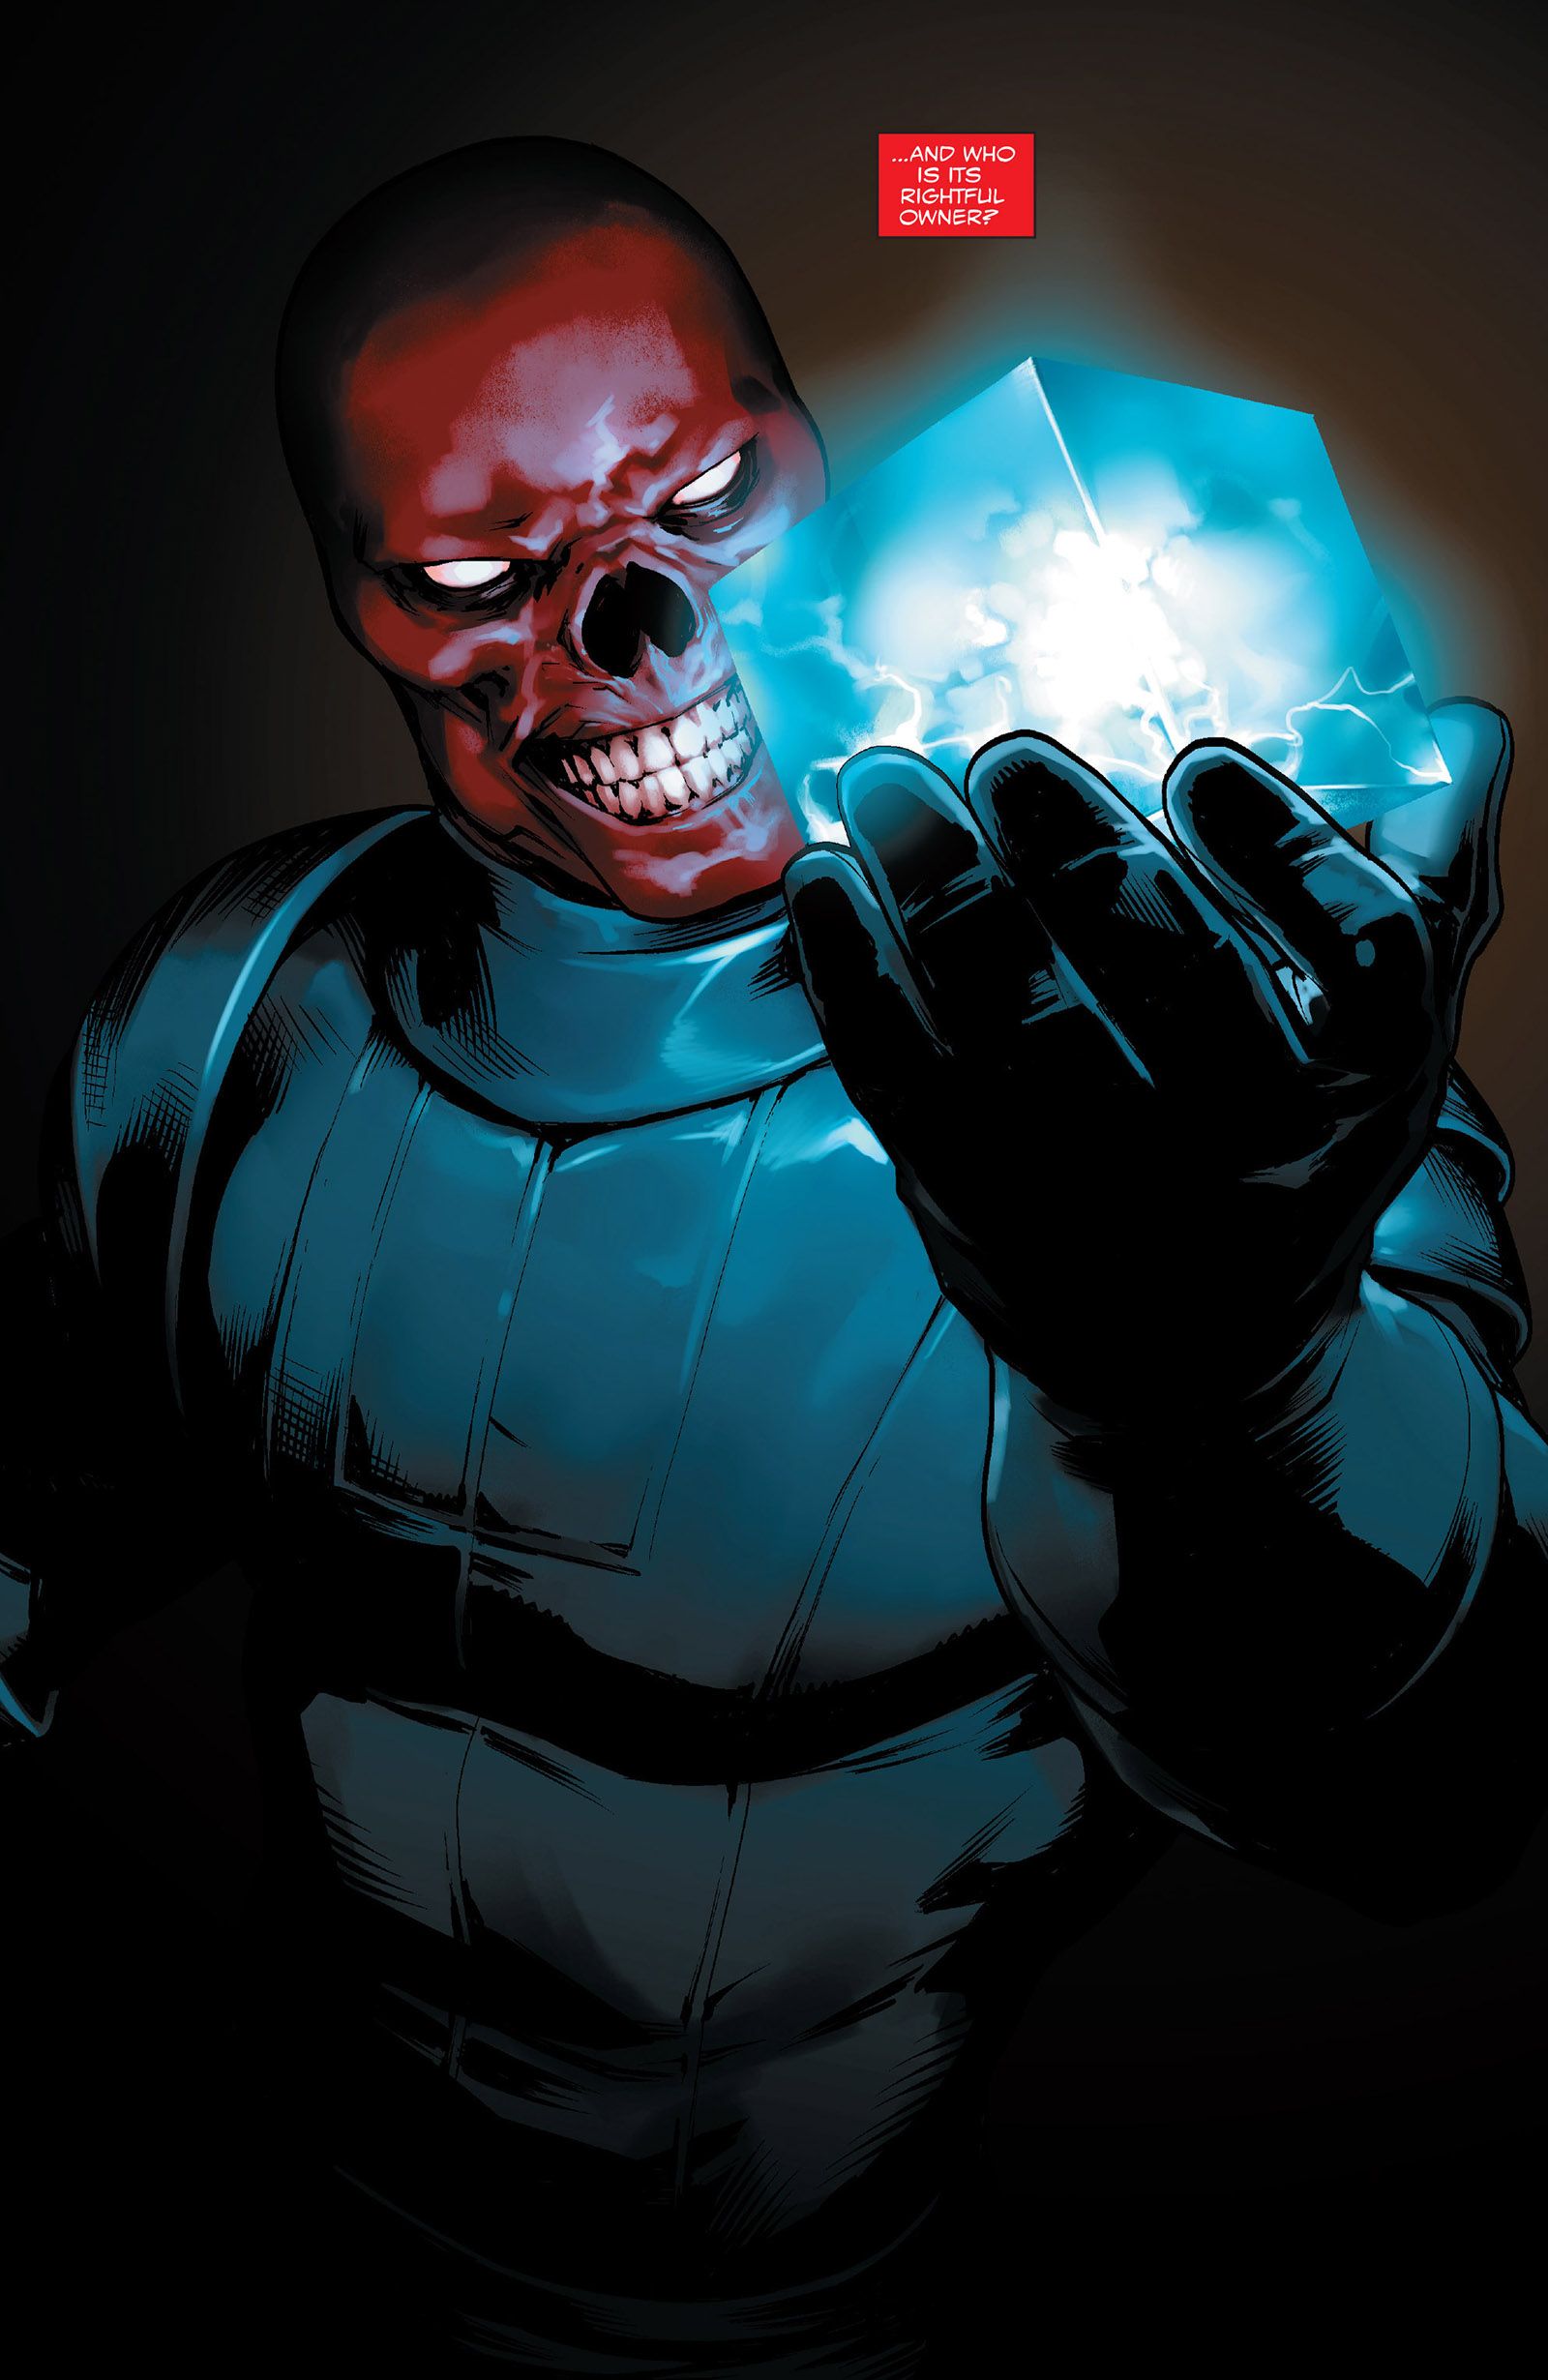 The Red Skull's Cosmic Cube in Captain America: Steve Rogers #2